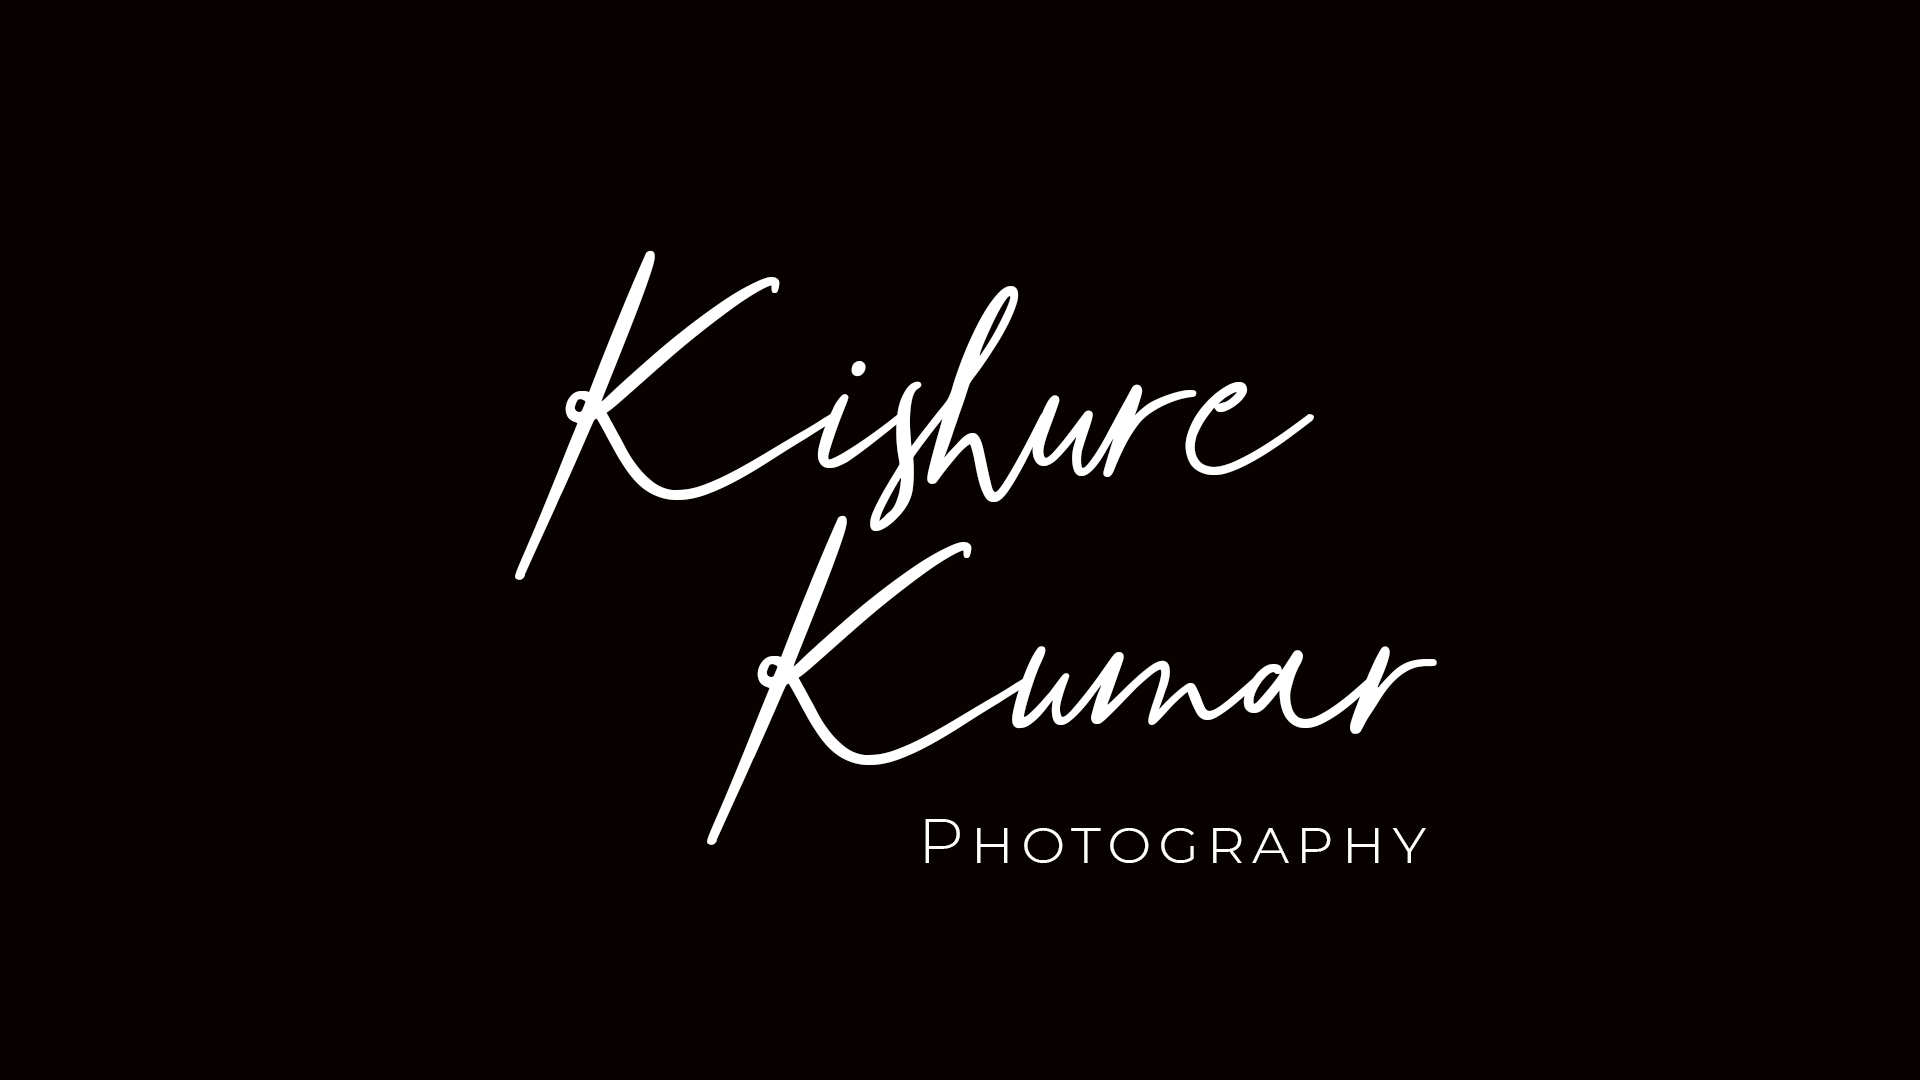 Kishure Kumar Photography